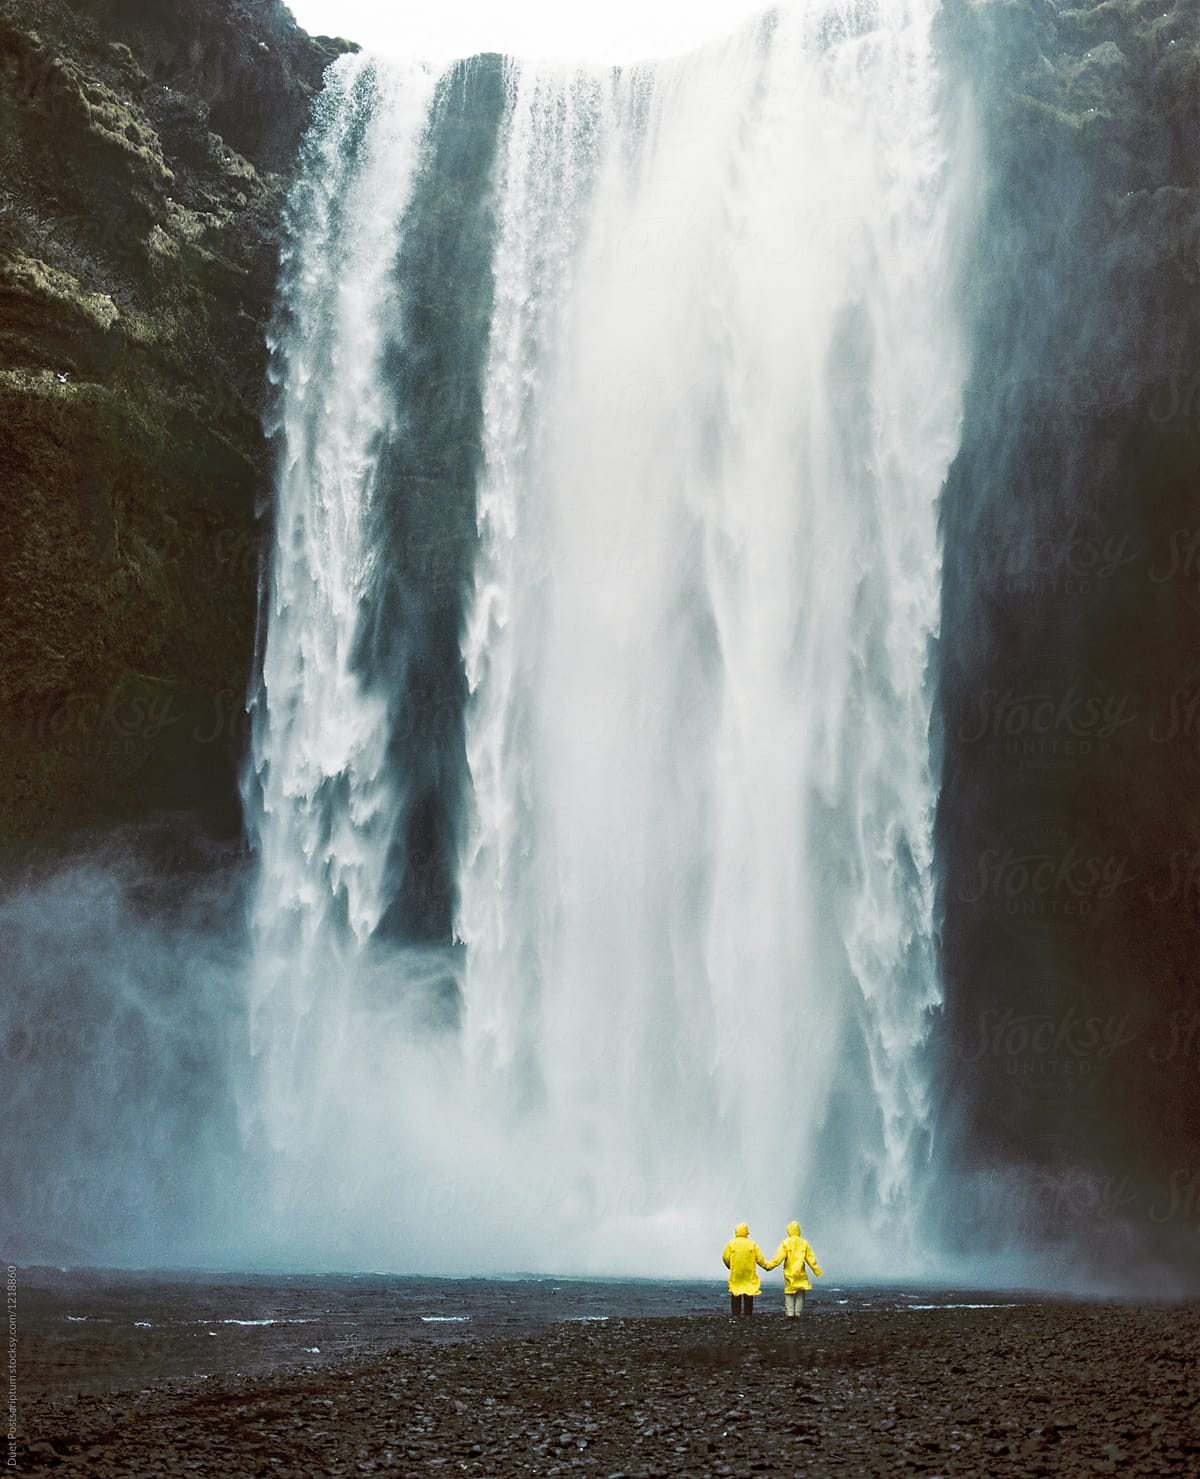 Couple in yellow raincoats on waterfall